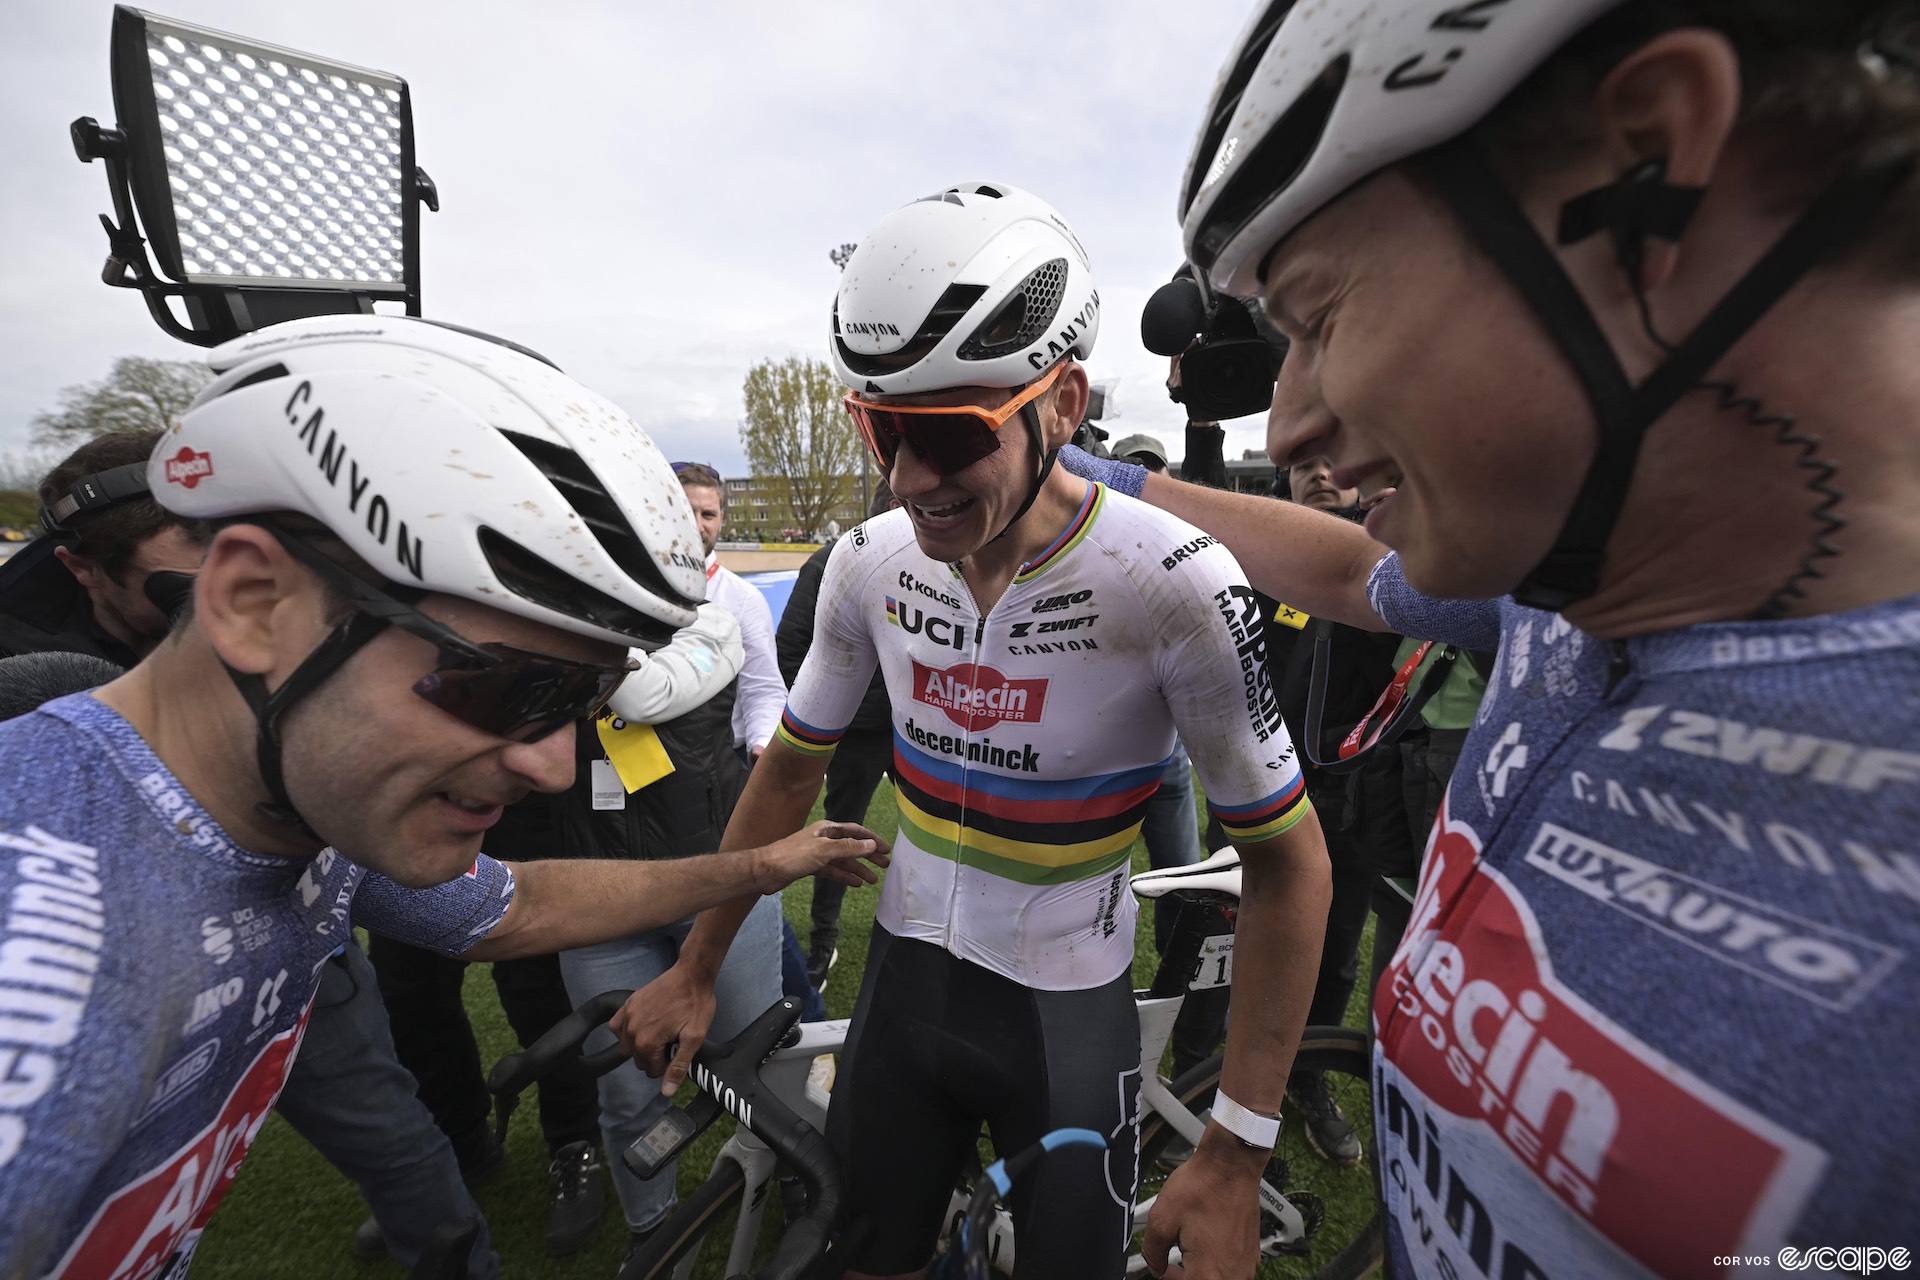 Gianni Vermeersch, Mathieu van der Poel, and Jasper Philipsen after Paris-Roubaix.